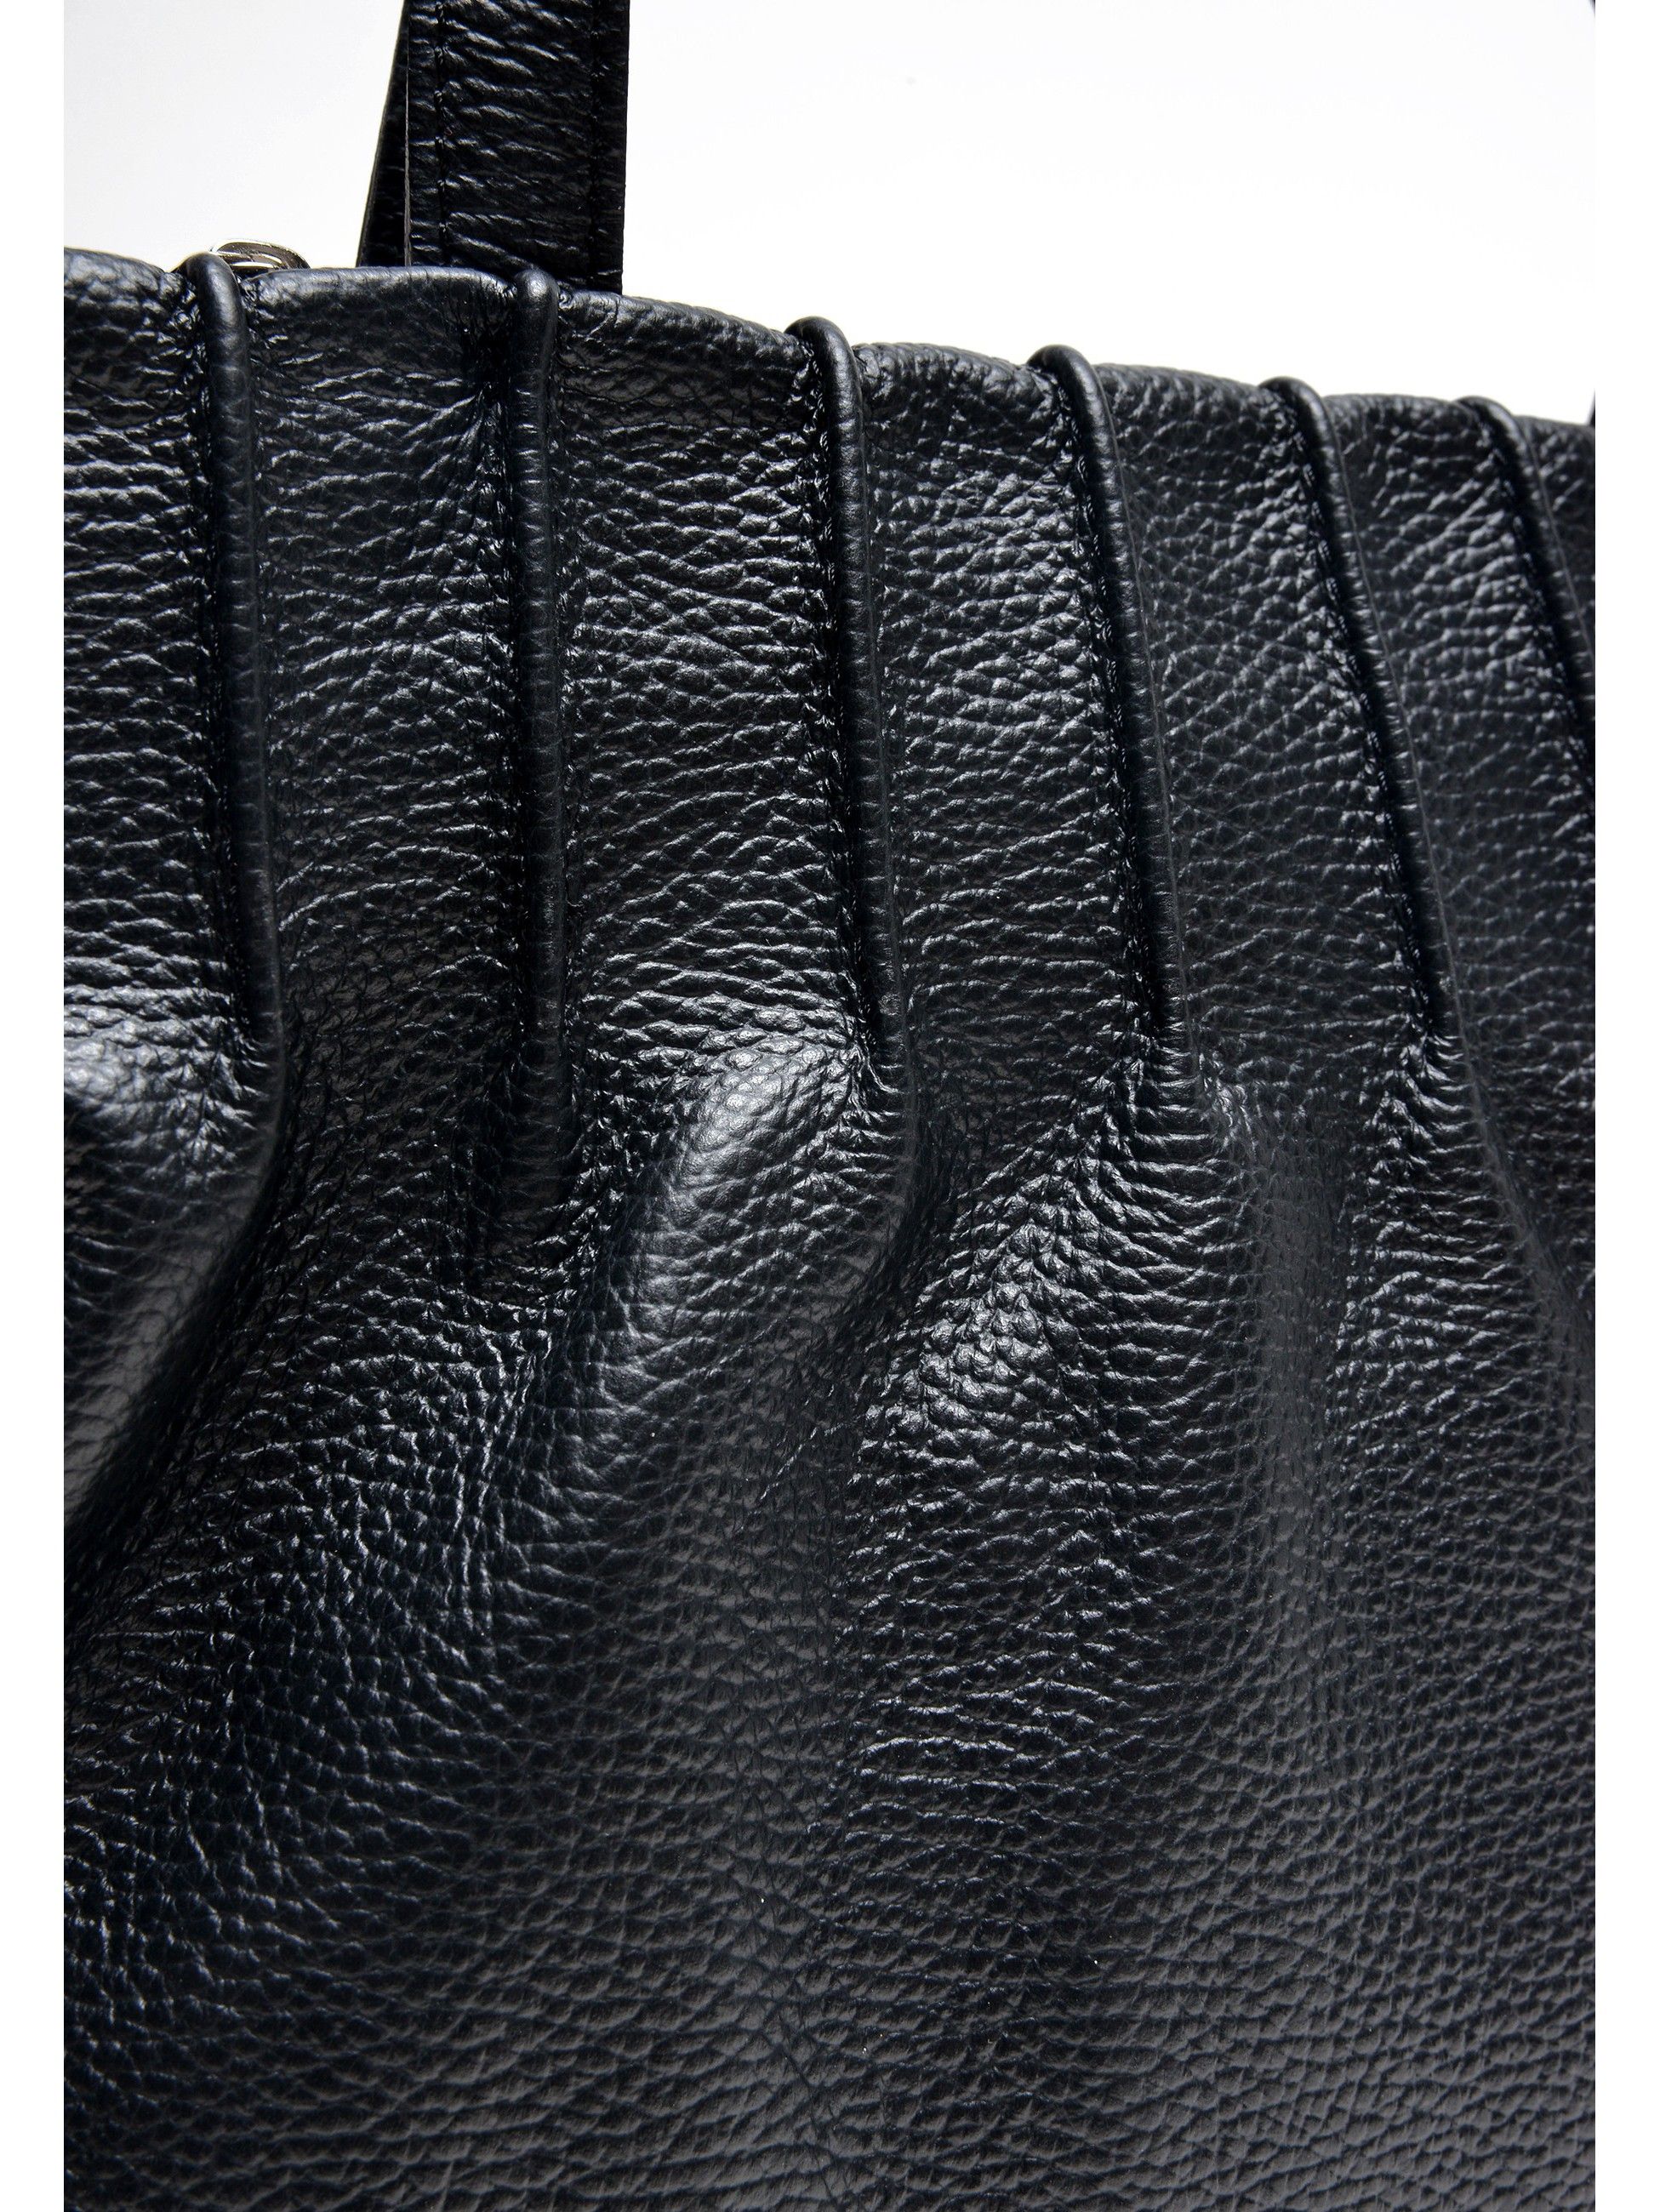 Top Handle Bag
100% cow leather
Top zip closure
Inner zip pocket
Dimensions (L): 30x46x11.5 cm
Handle: 62 cm
Shoulder strap: /